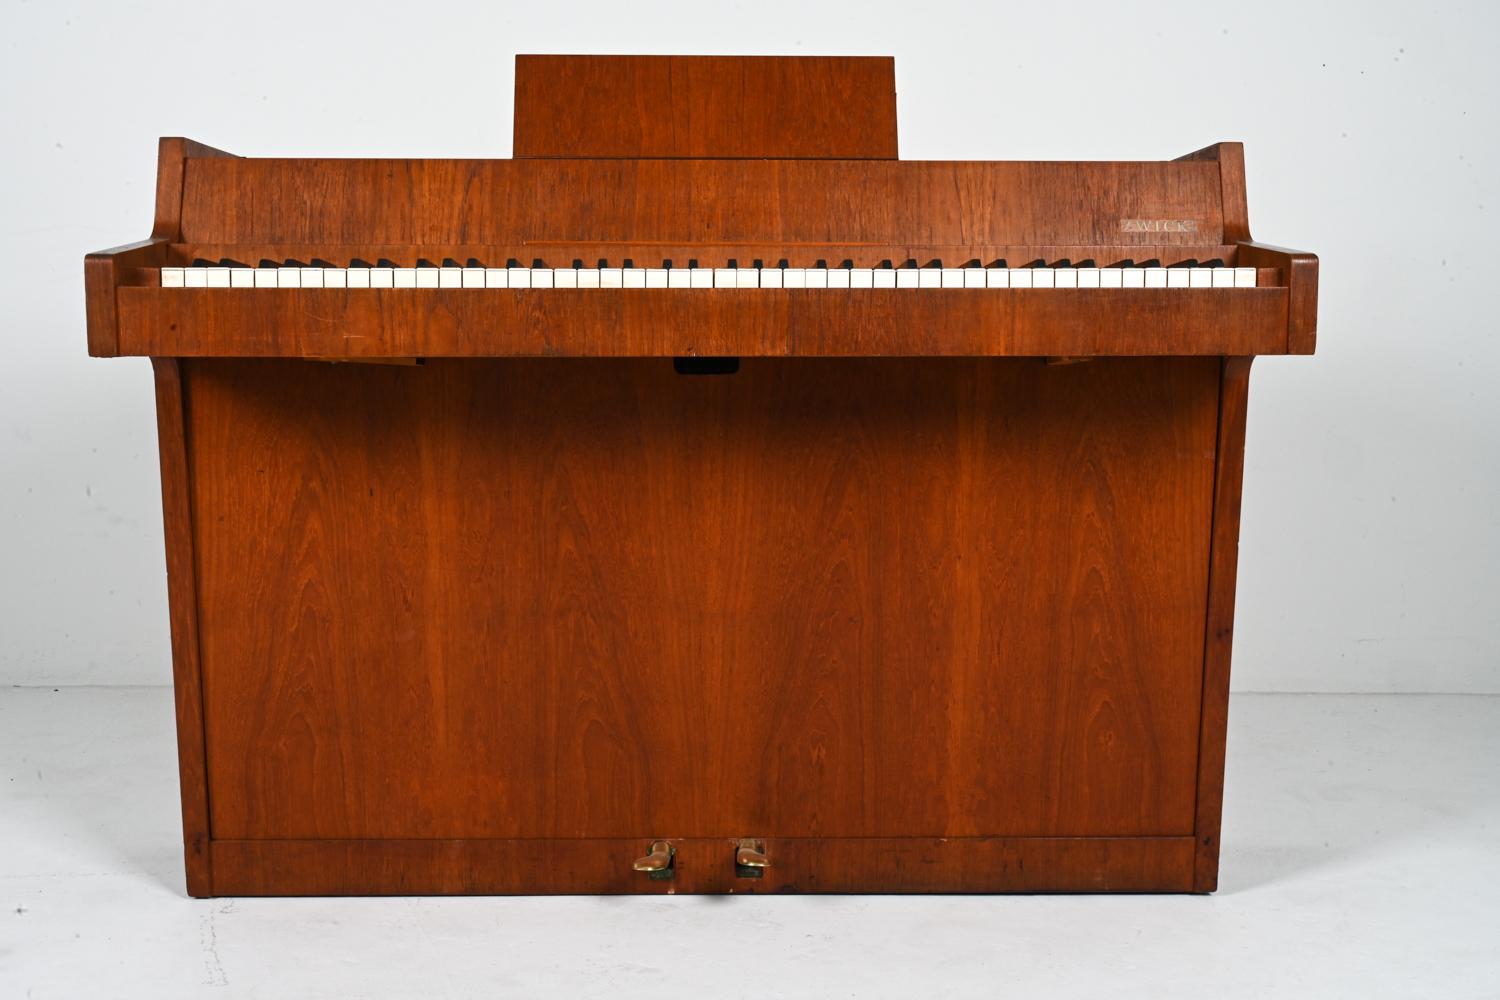 Danish Mid-Century Teak Pianette by Louis Zwicki, c. 1960's In Good Condition For Sale In Norwalk, CT